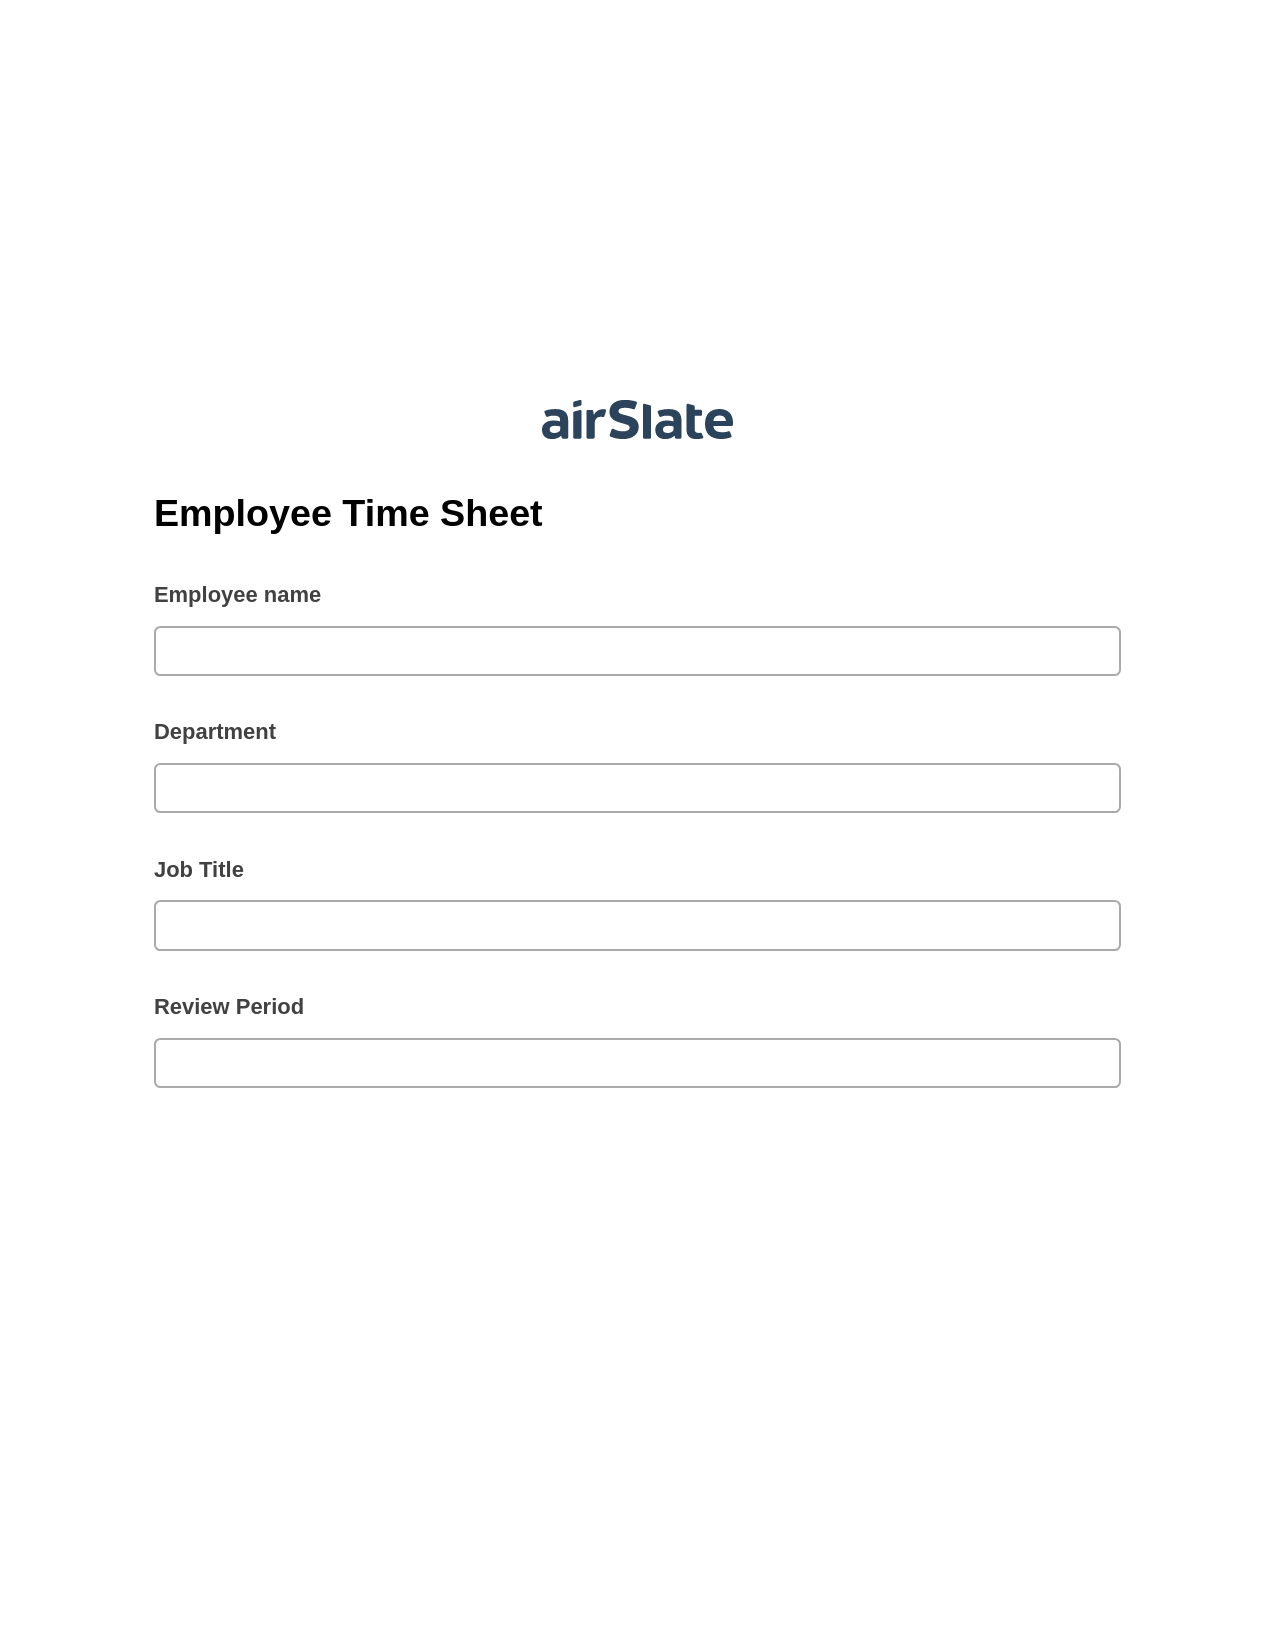 Multirole Employee Time Sheet Pre-fill Dropdowns from Google Sheet Bot, Update Audit Trail Bot, Archive to SharePoint Folder Bot